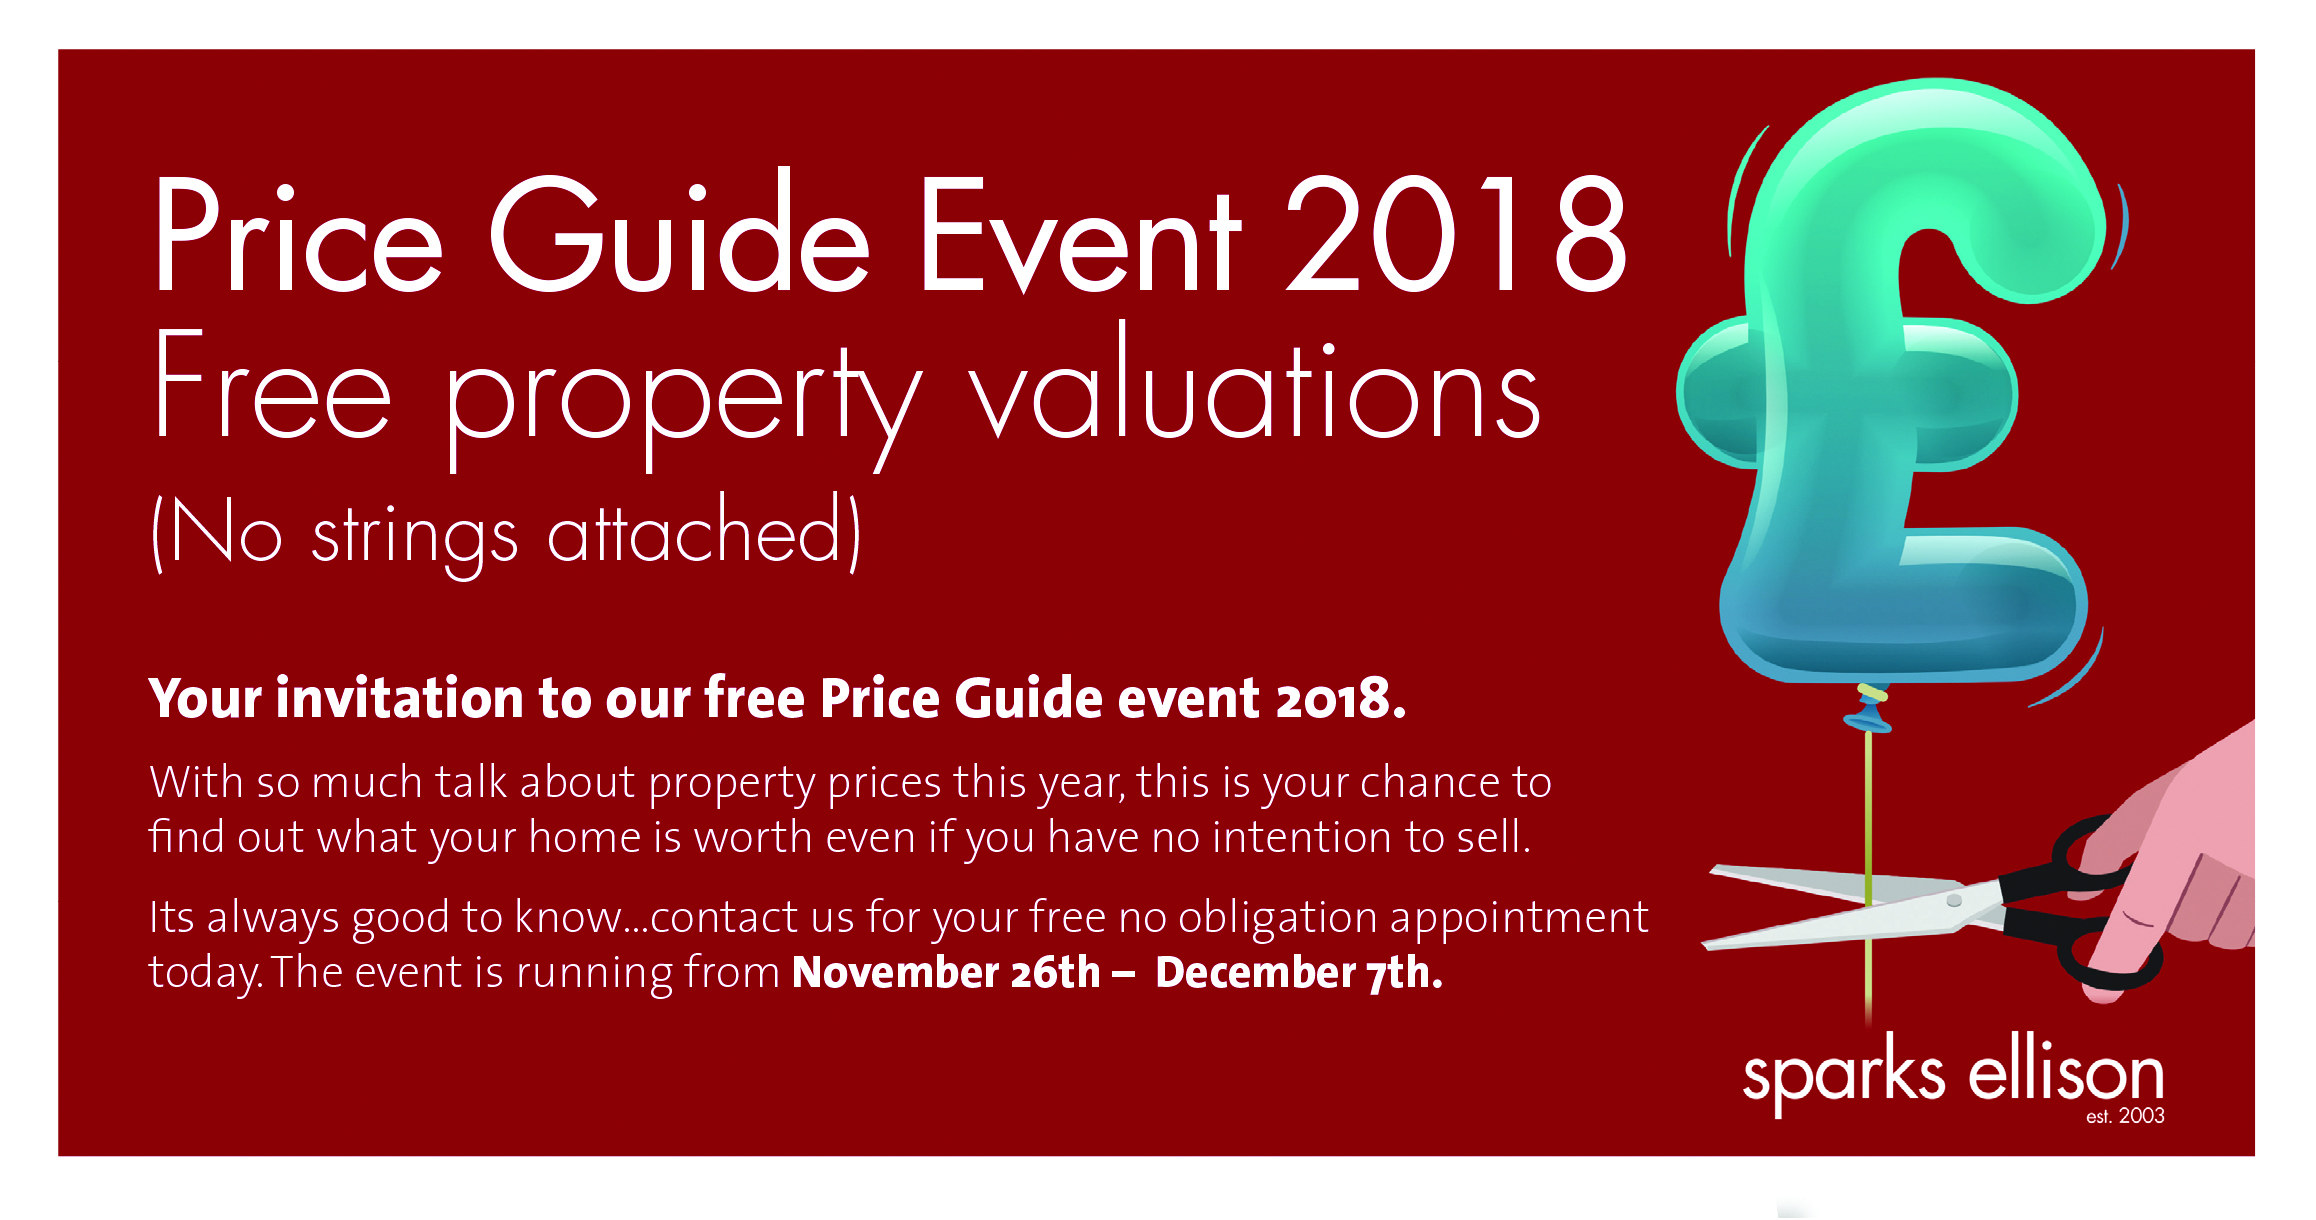 Price Guide Event 2018